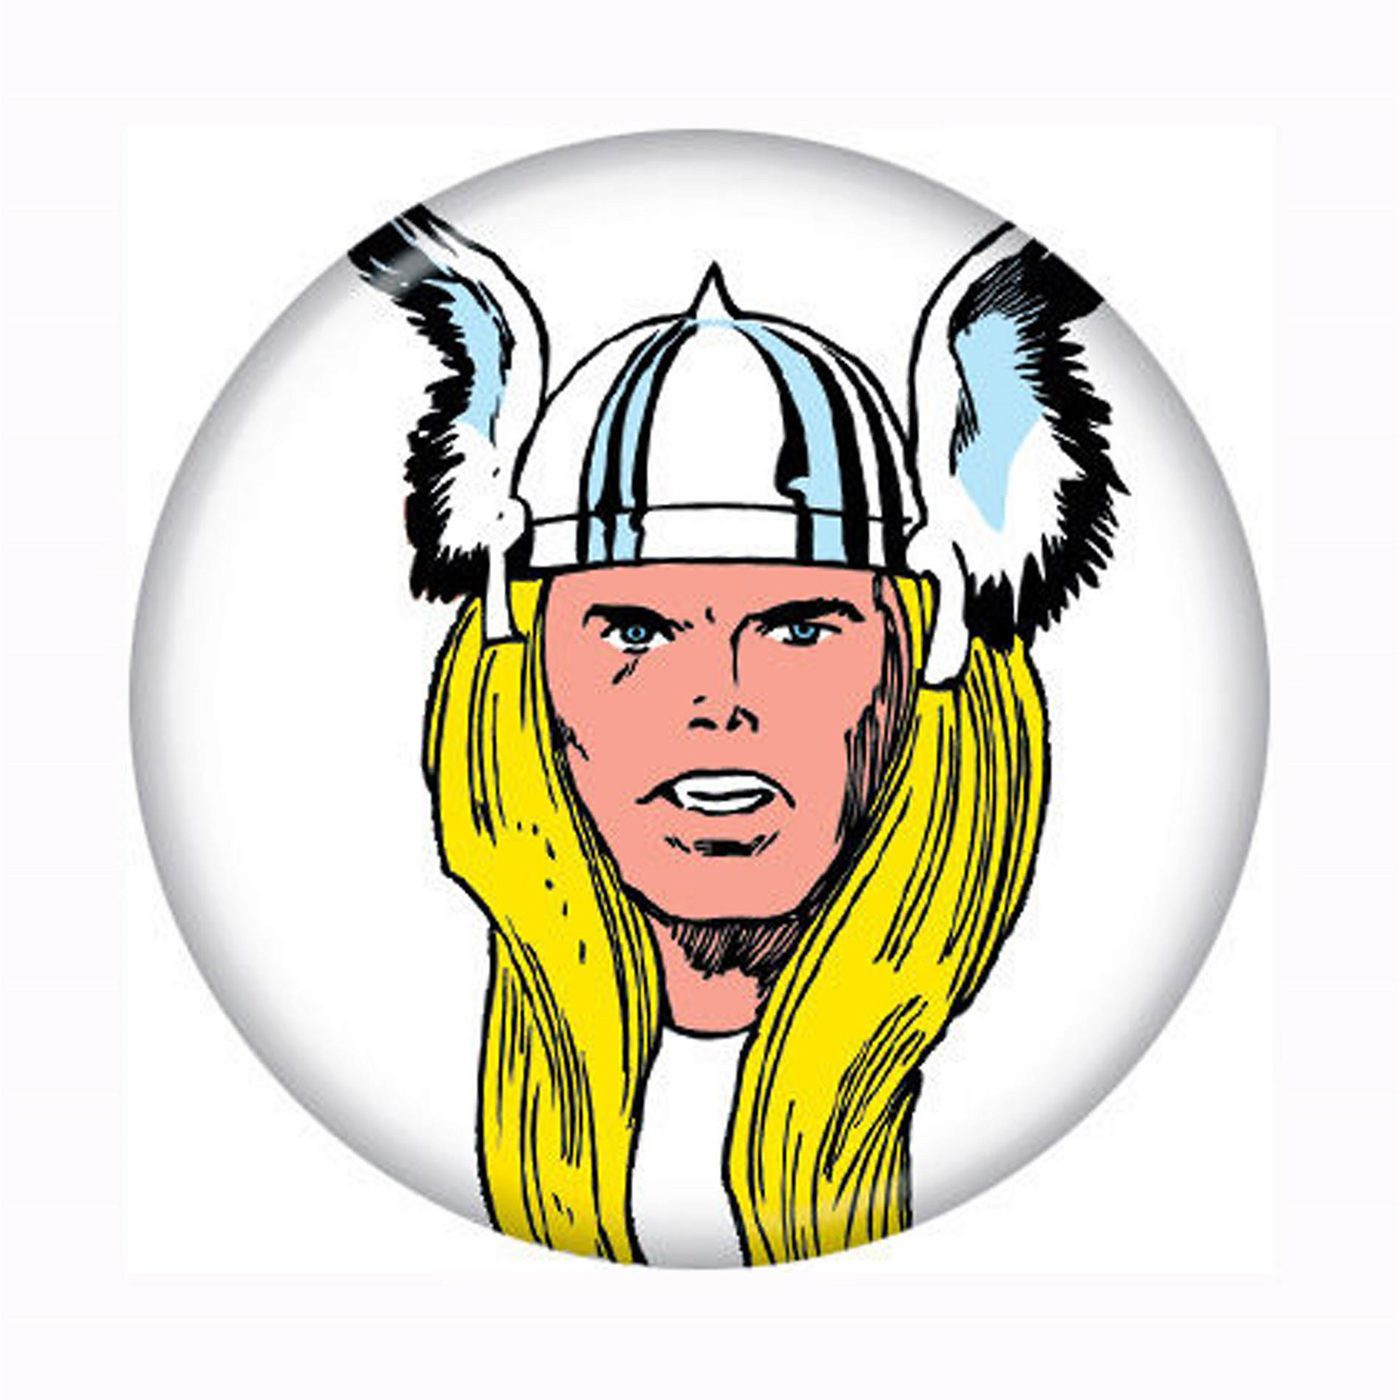 Thor Helmed Head Button